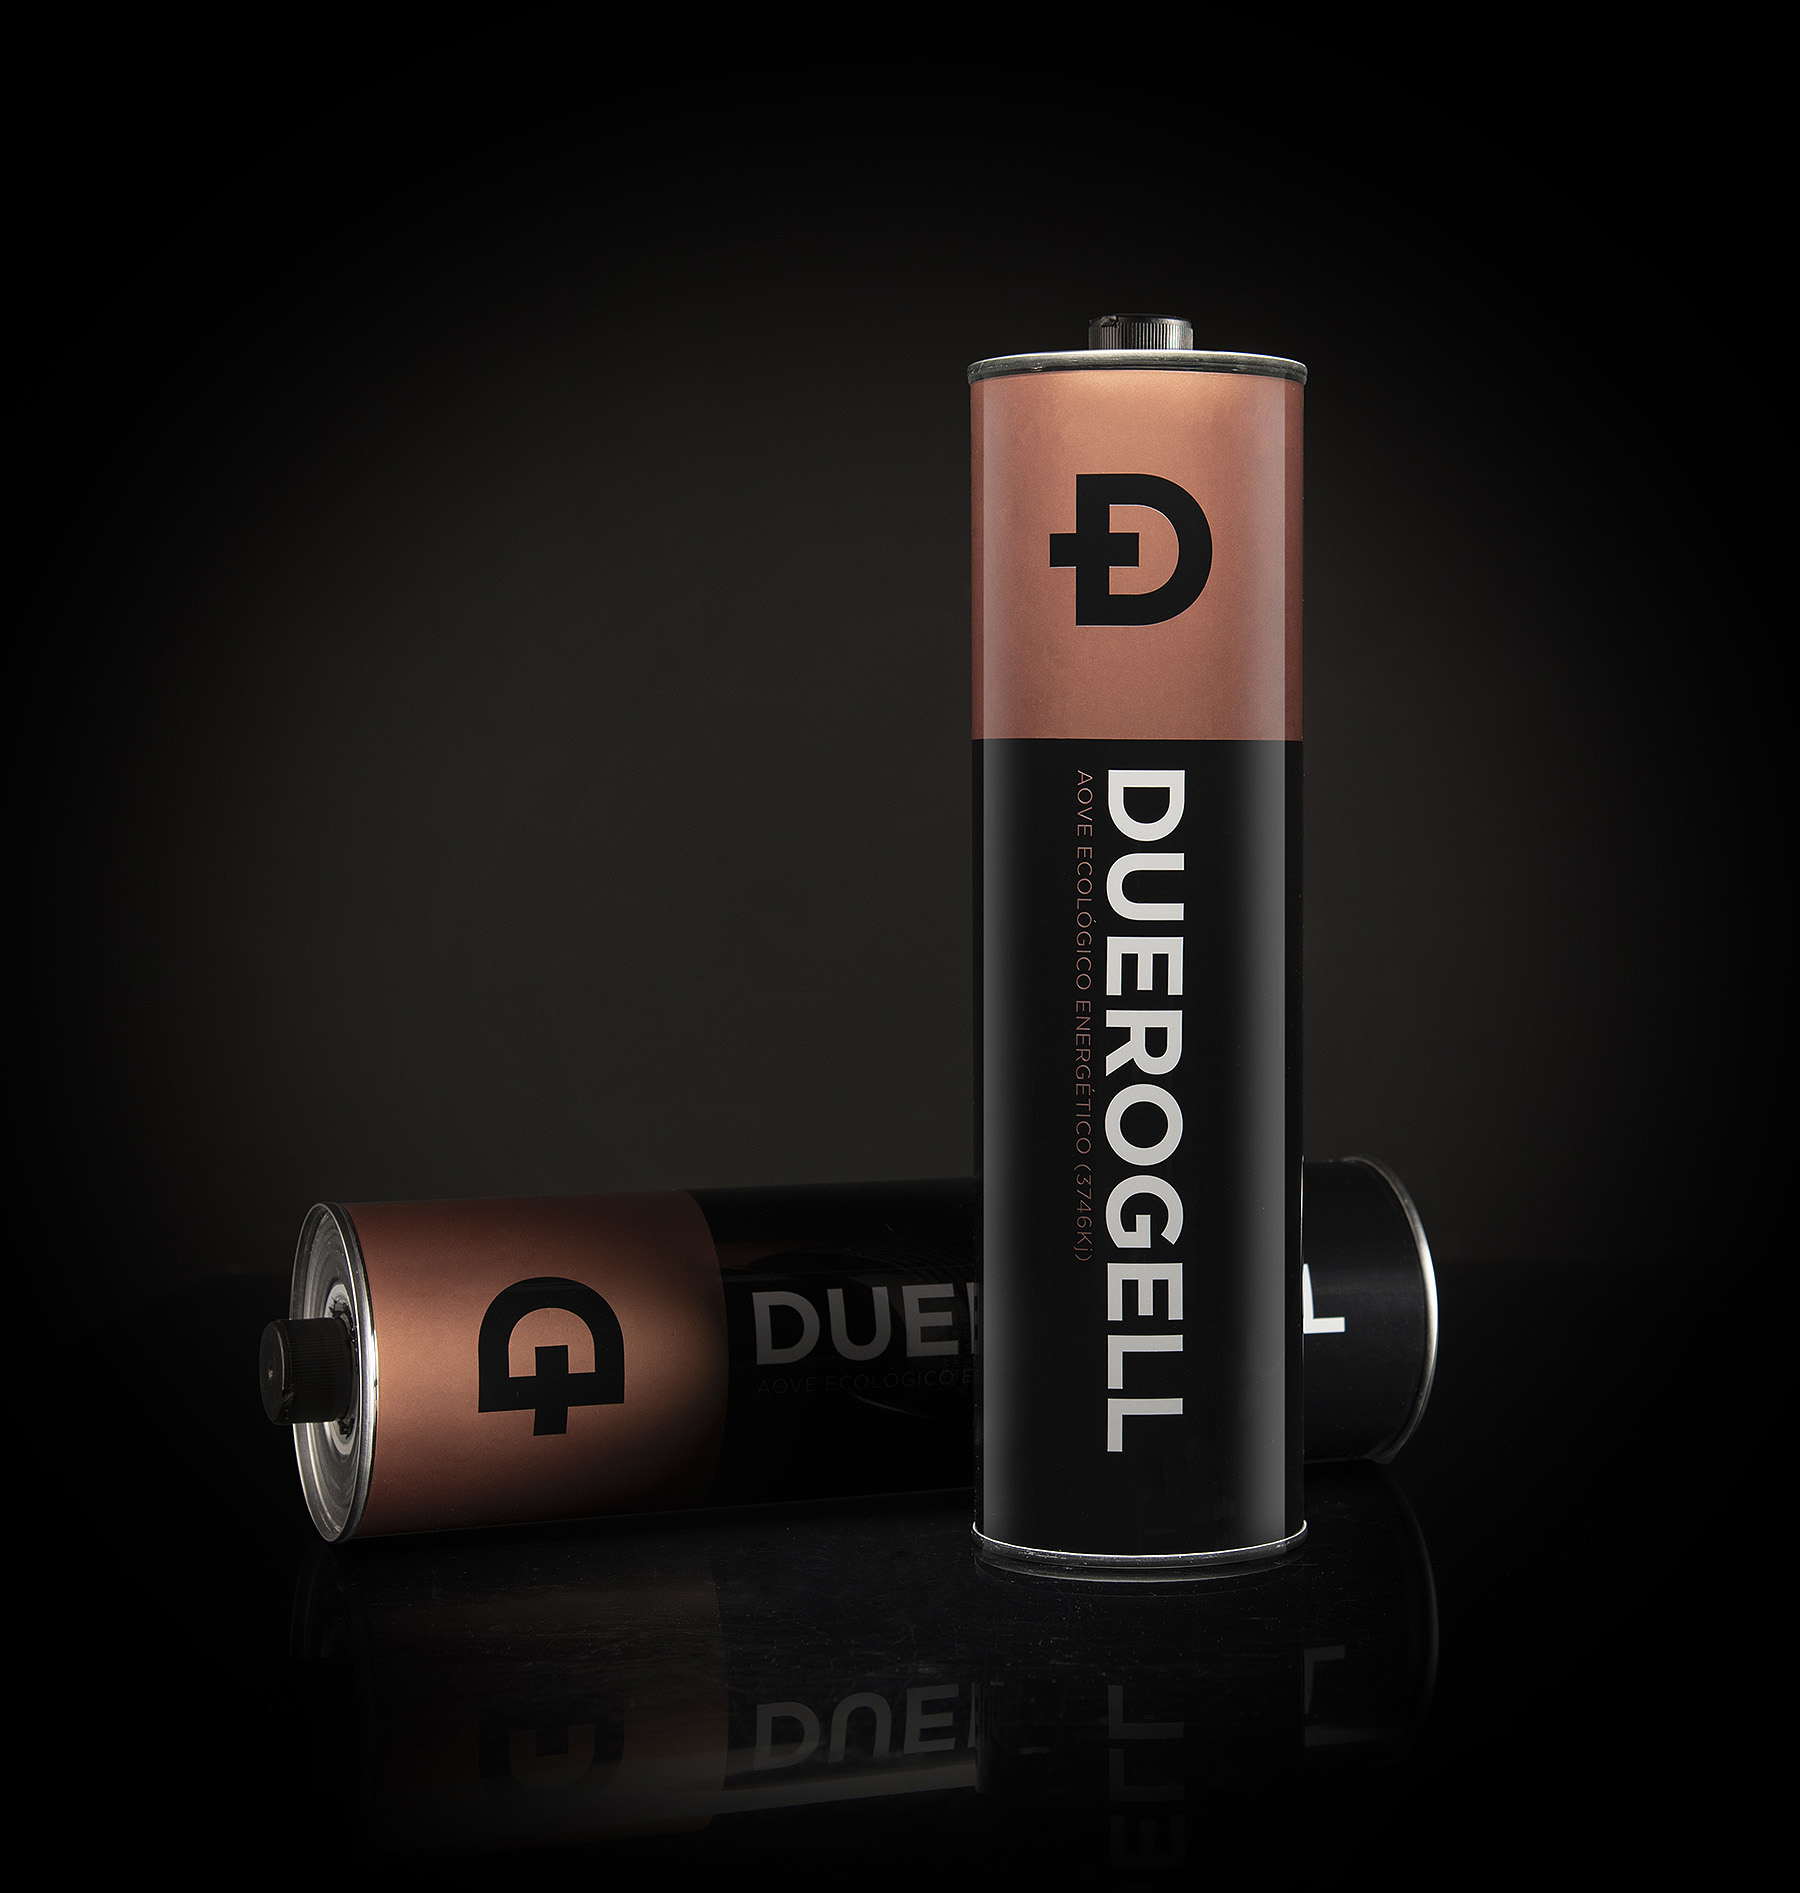 Duerogell Energetic Oil Brand and Packaging Design